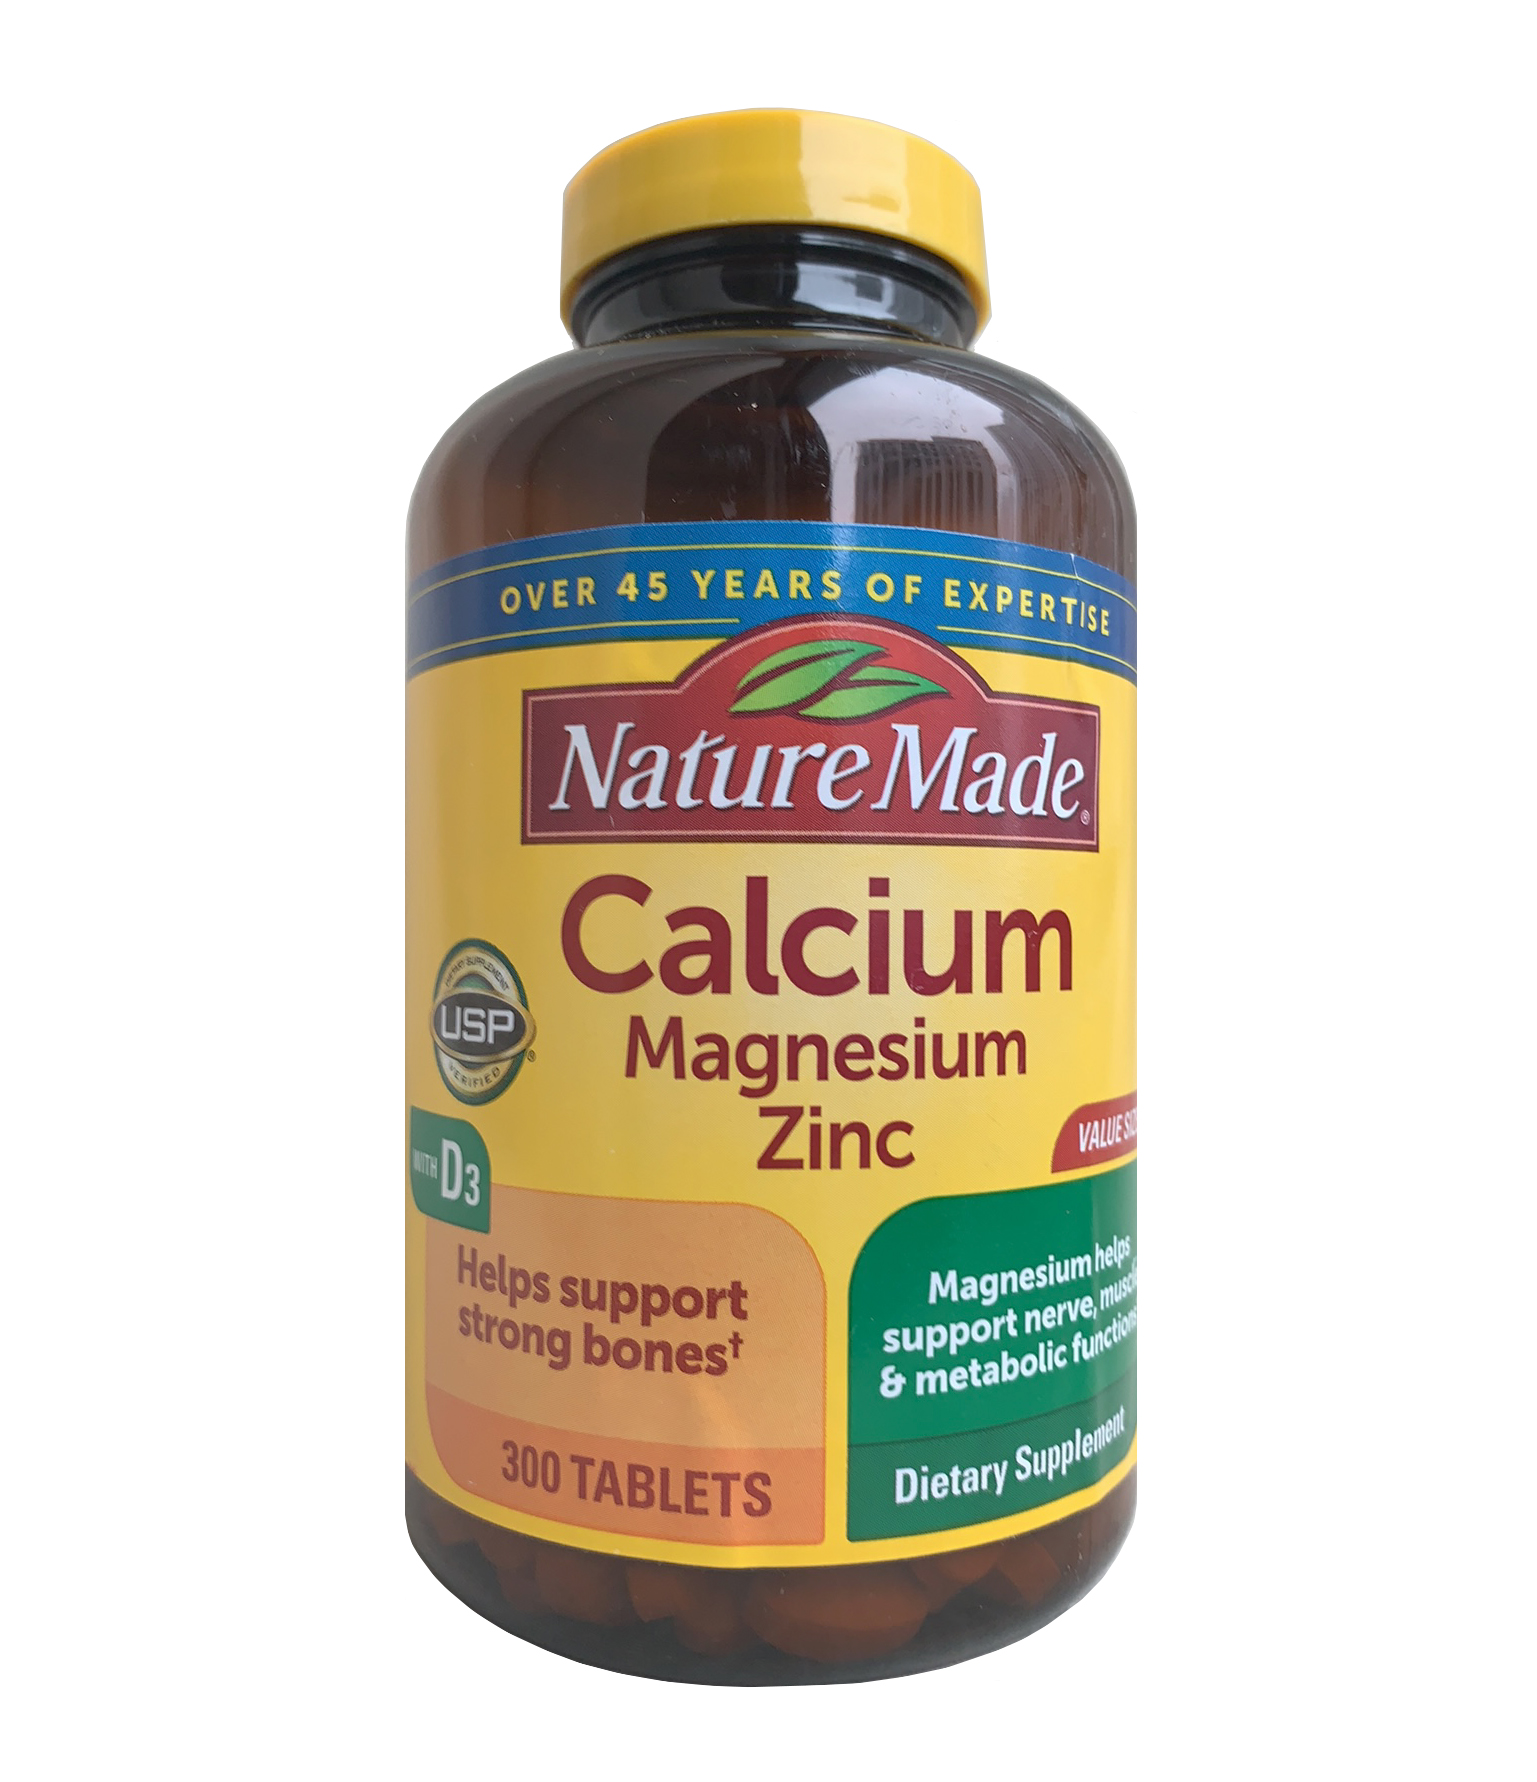 Viên uống Nature Made Calcium Magnesium Zinc With Vitamin D3 hộp 300 viên nắp vặn